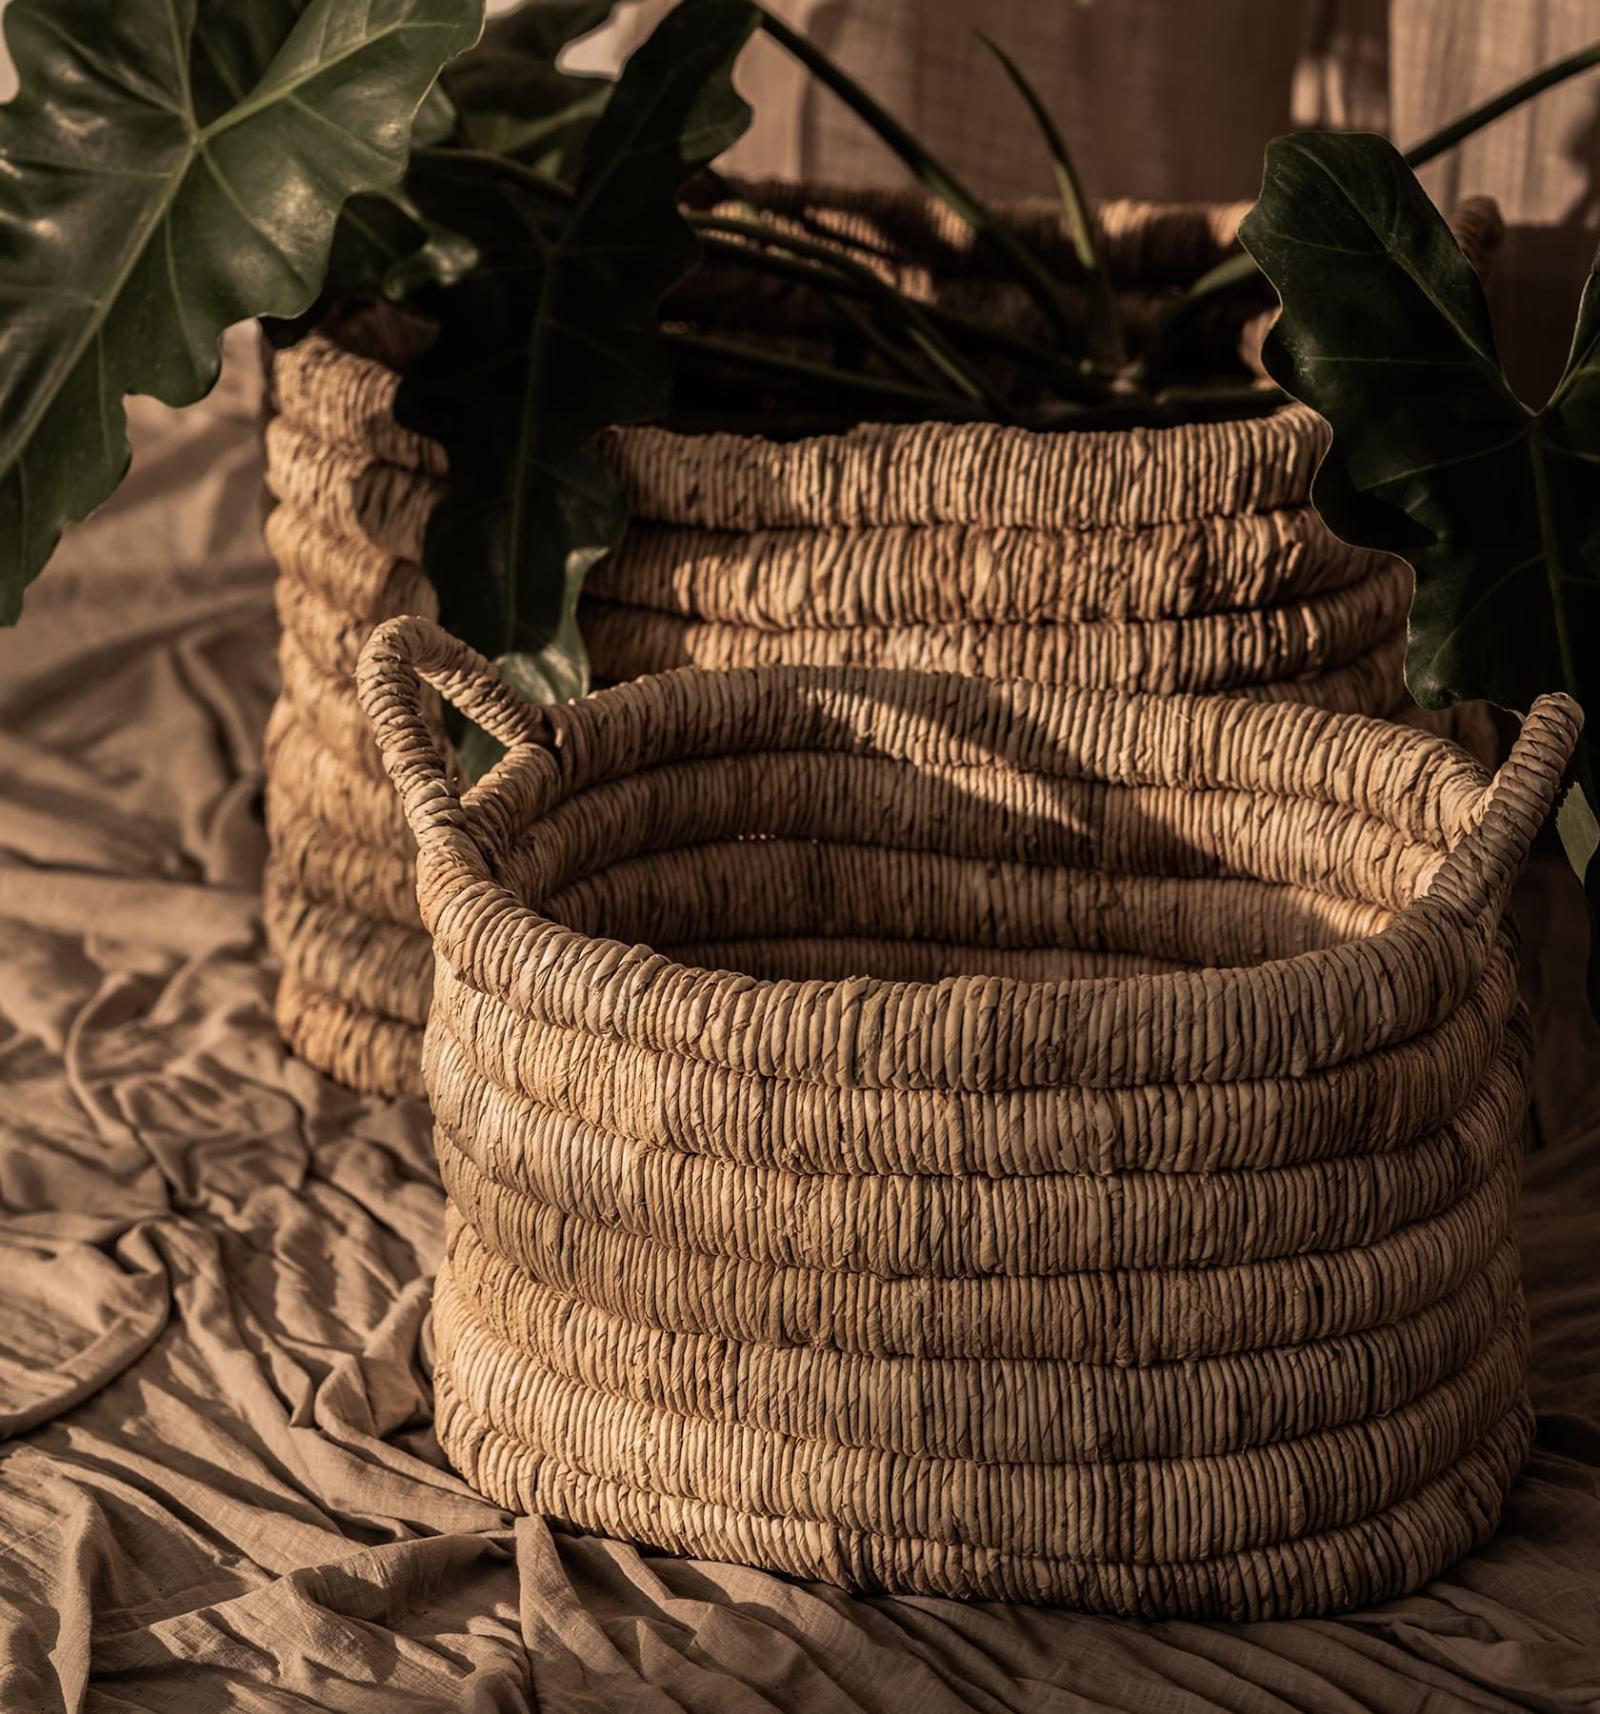 dBodhi Caterpillar Sago Rectangular Basket - Set of 2